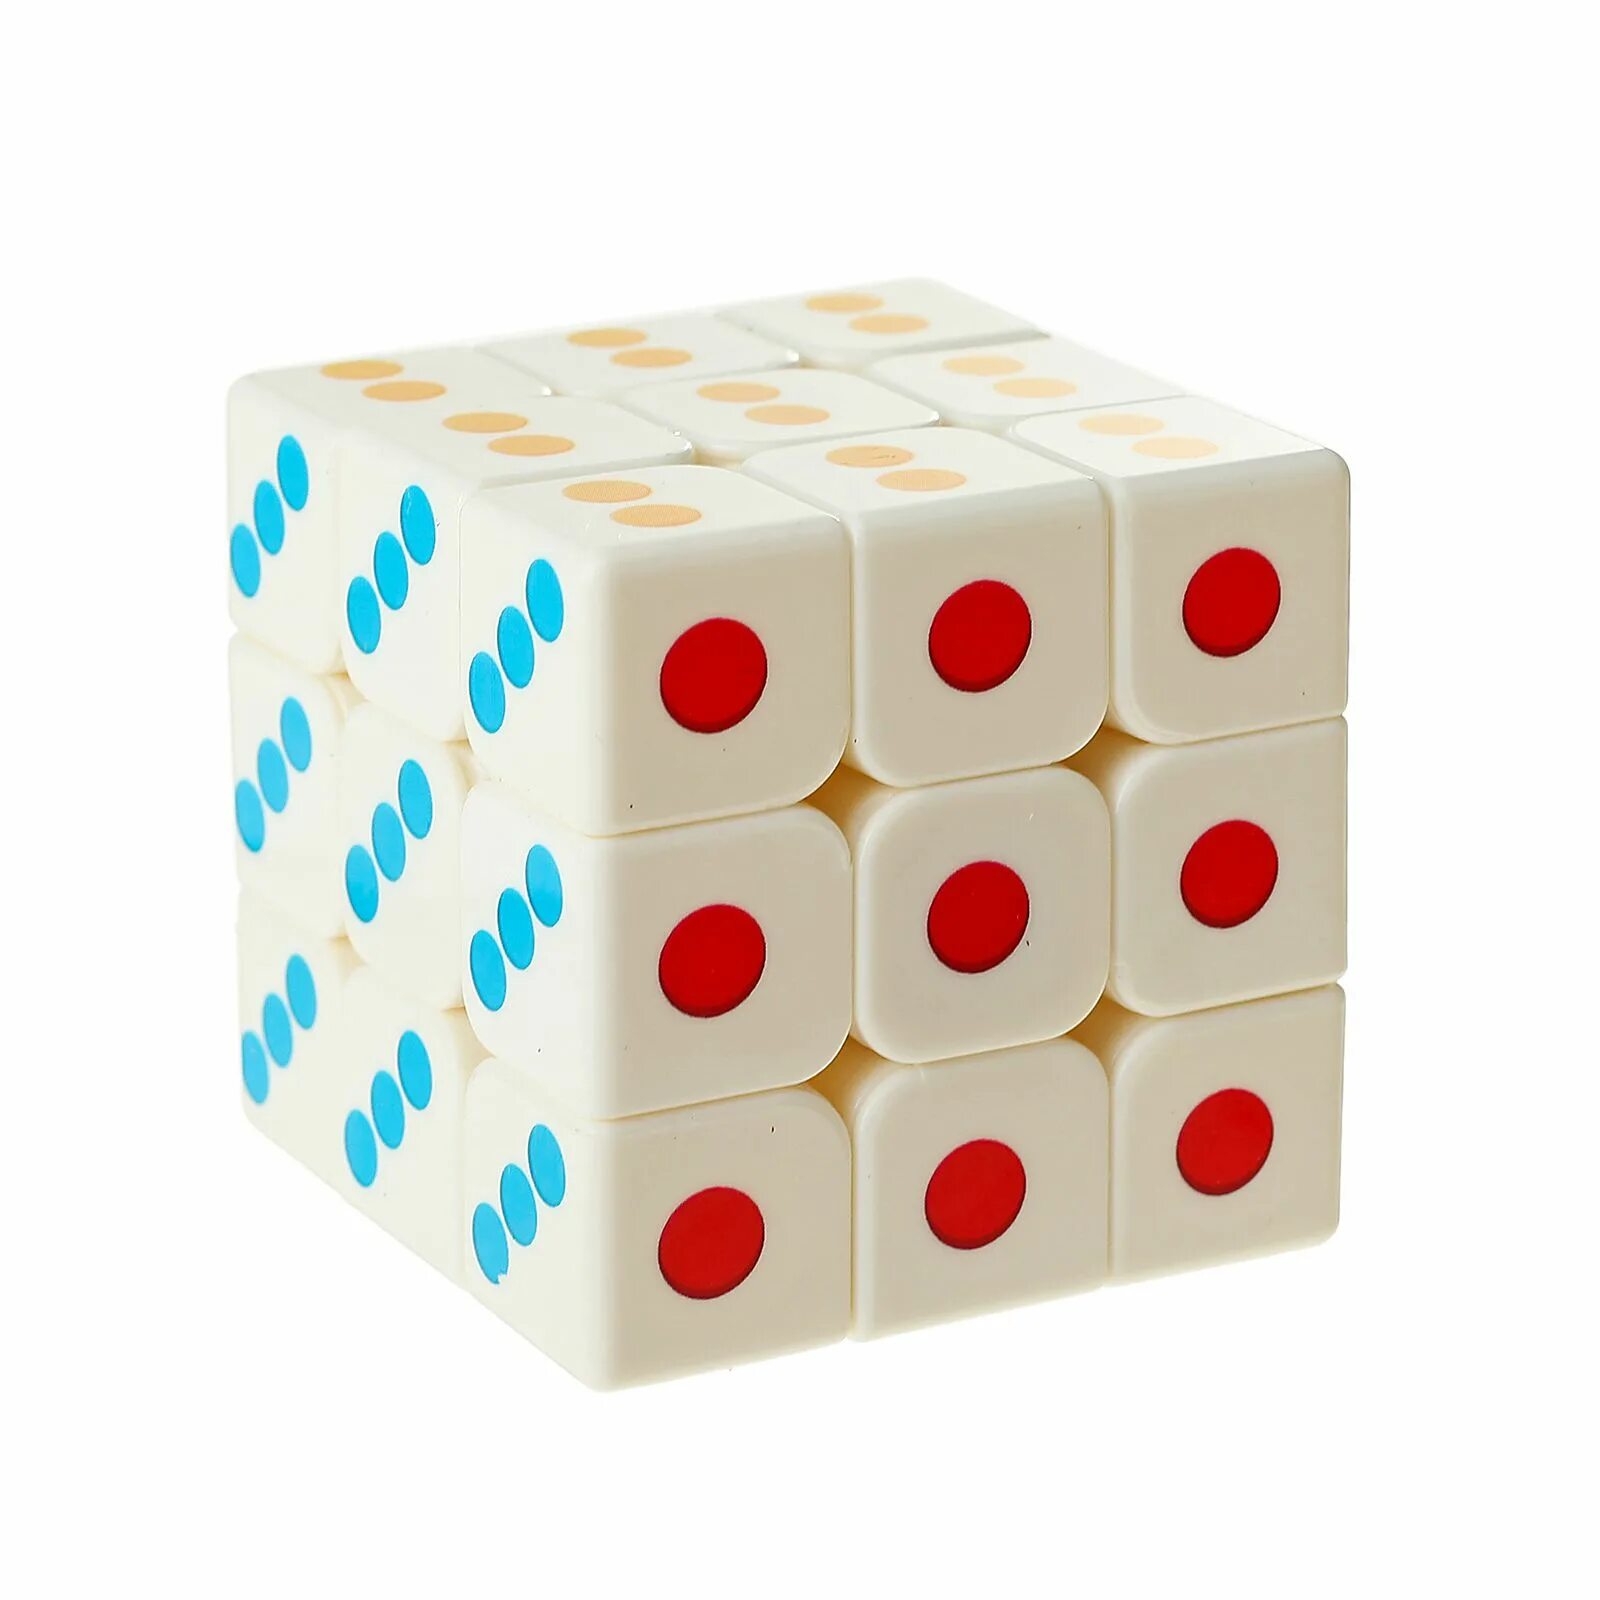 Кубики с шарами. Кубик. Кубик рубик. Механическая головоломка кубик. Классические кубики.